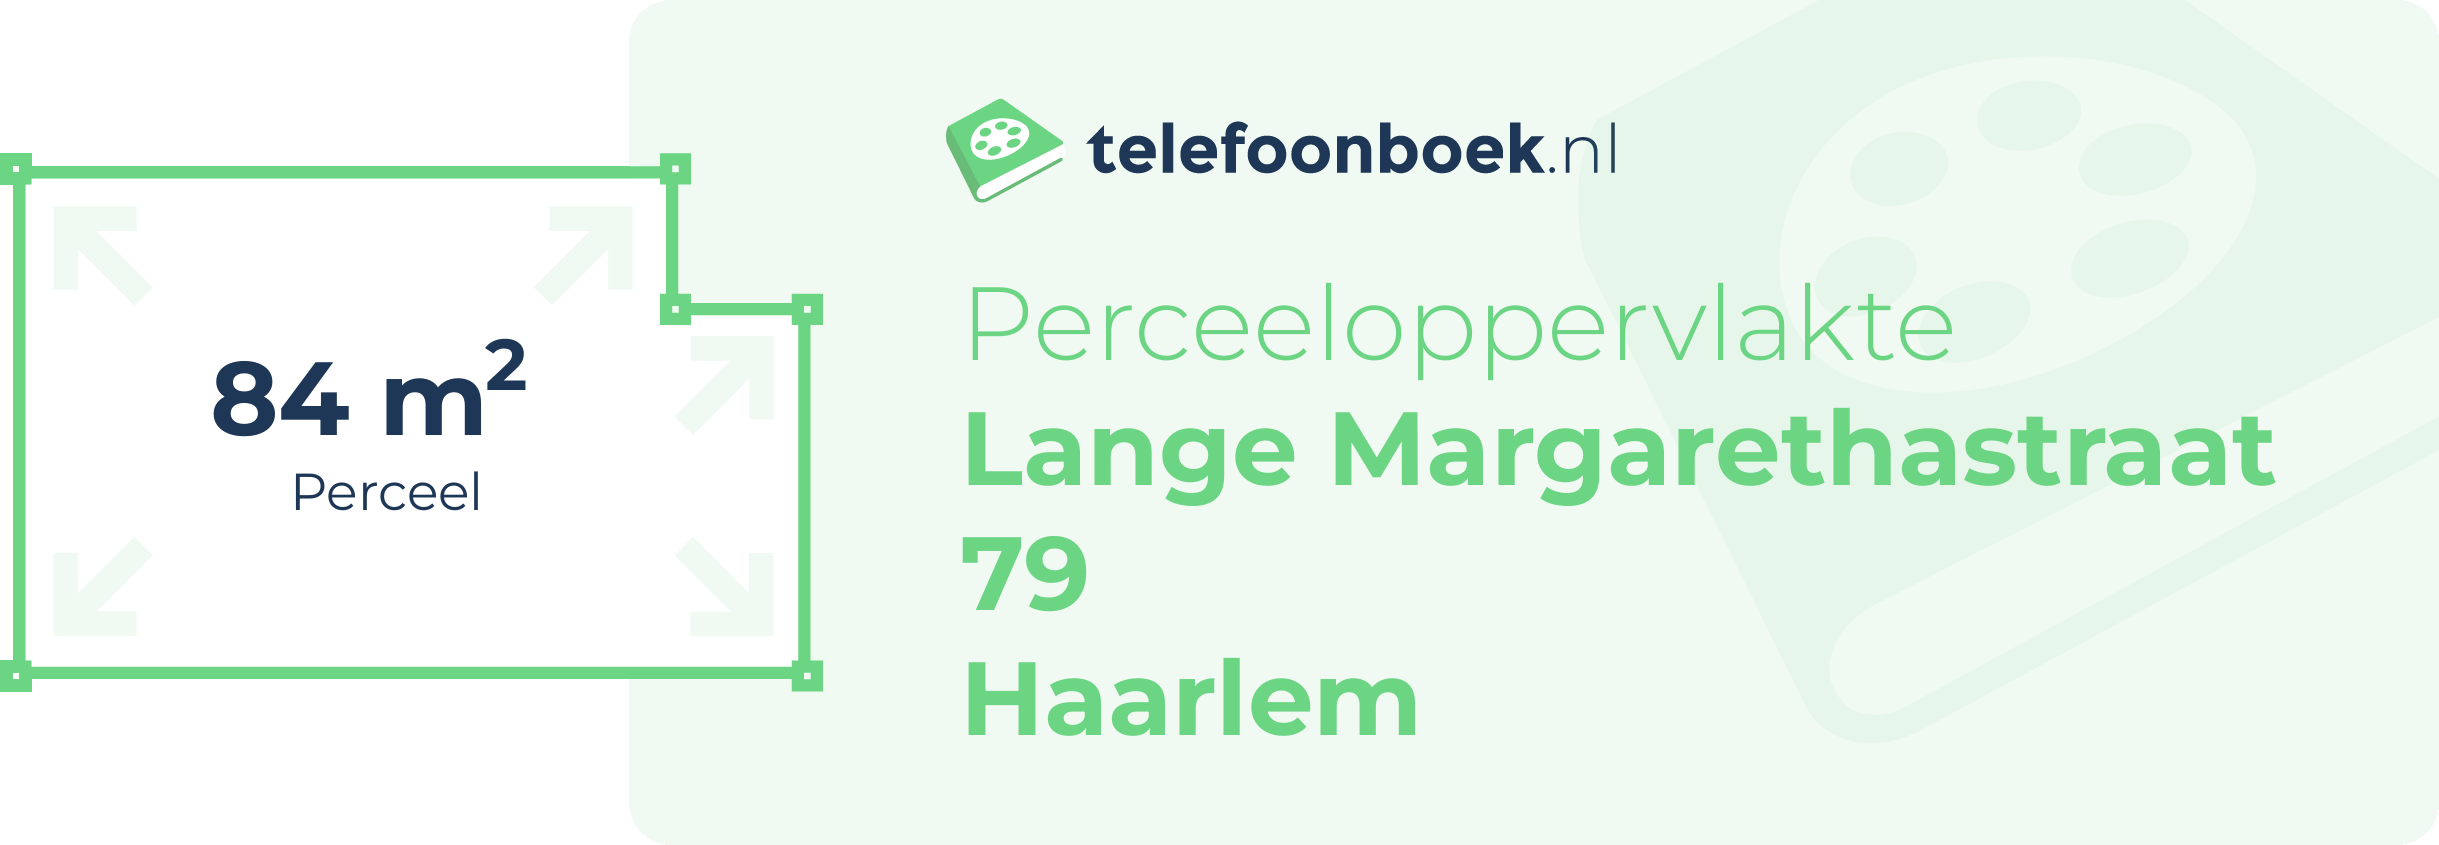 Perceeloppervlakte Lange Margarethastraat 79 Haarlem